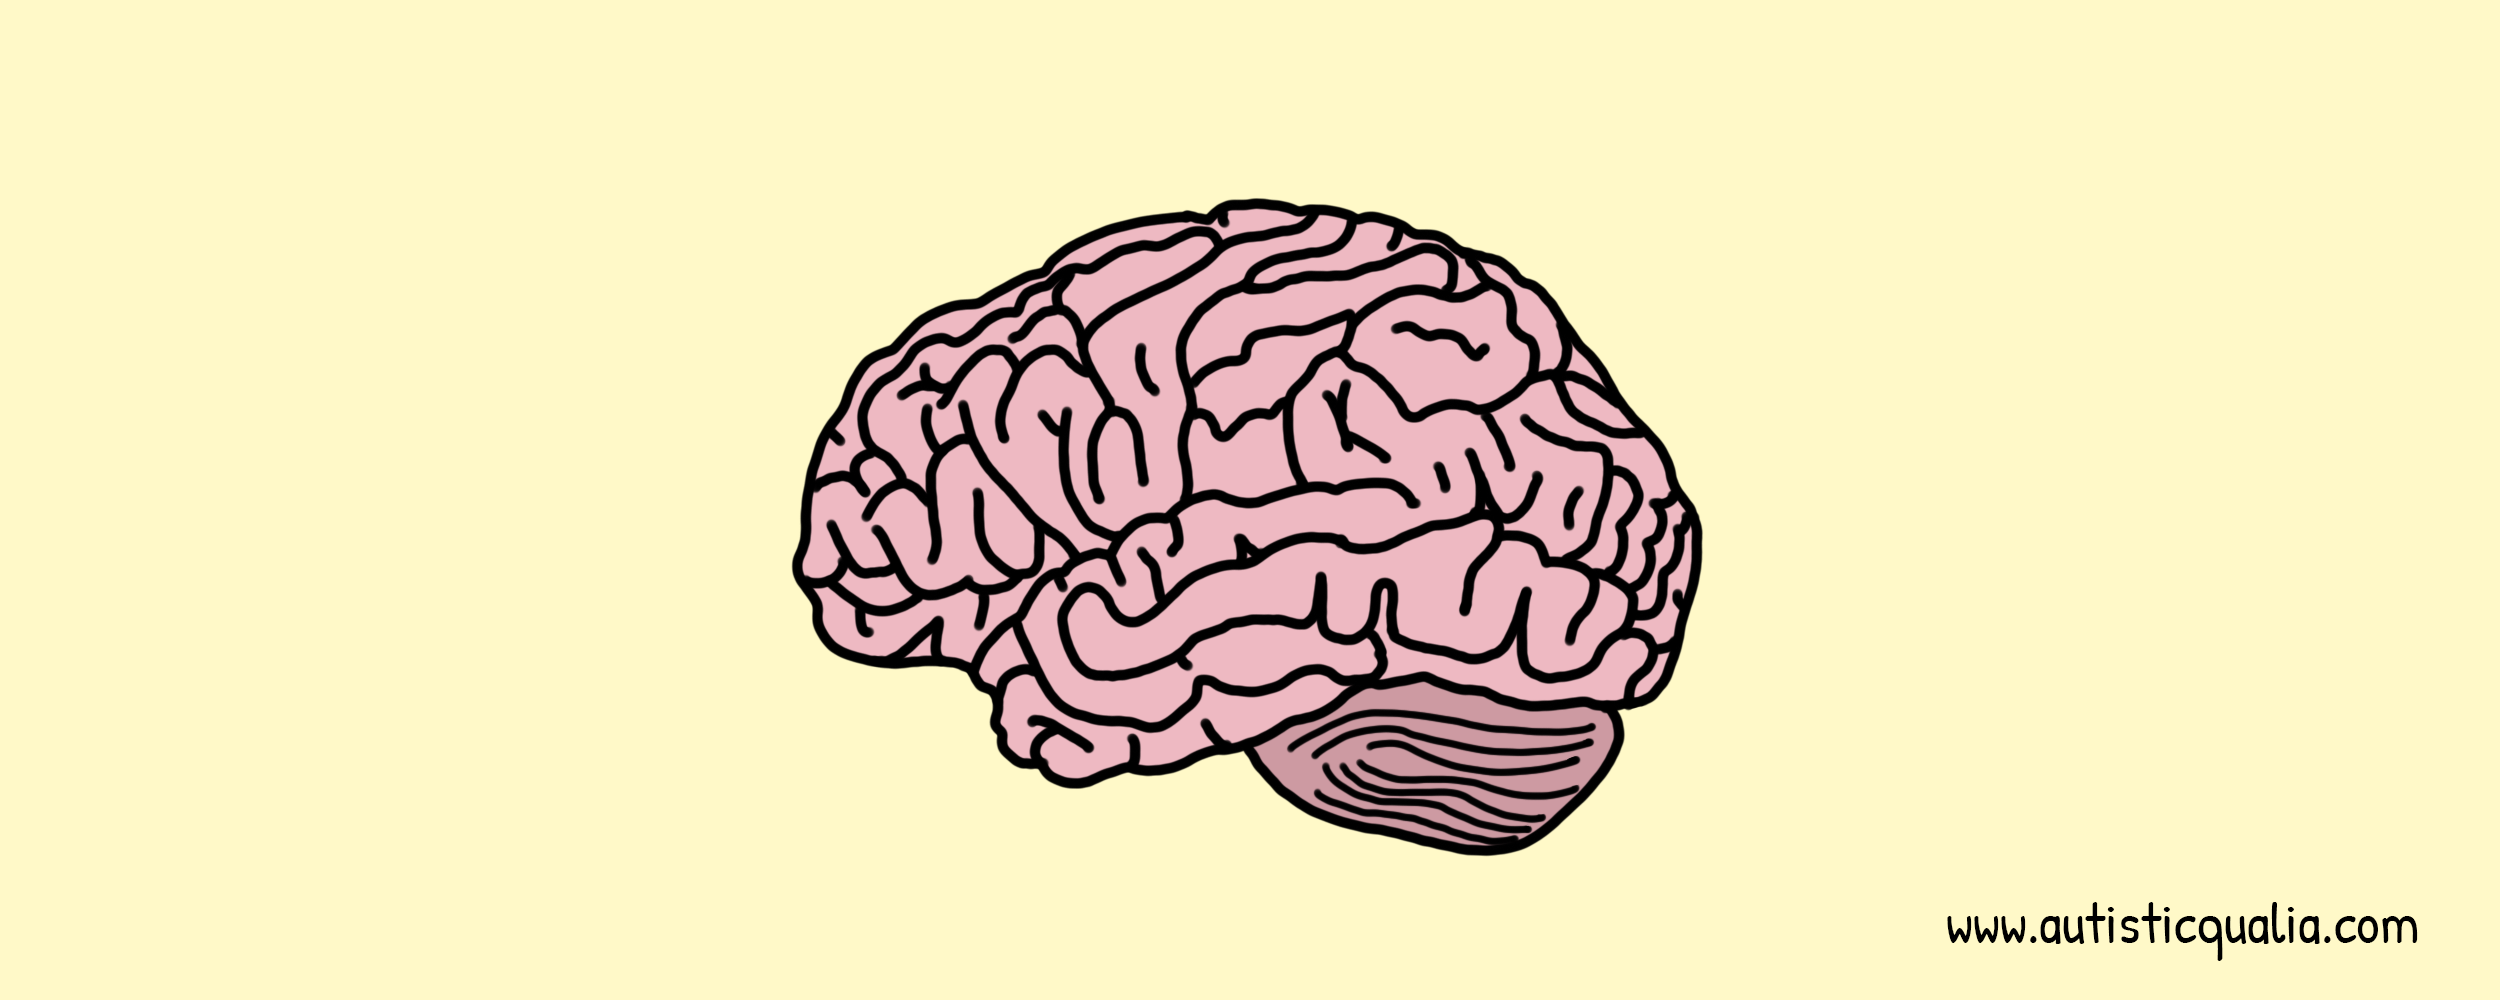 Brain drawing